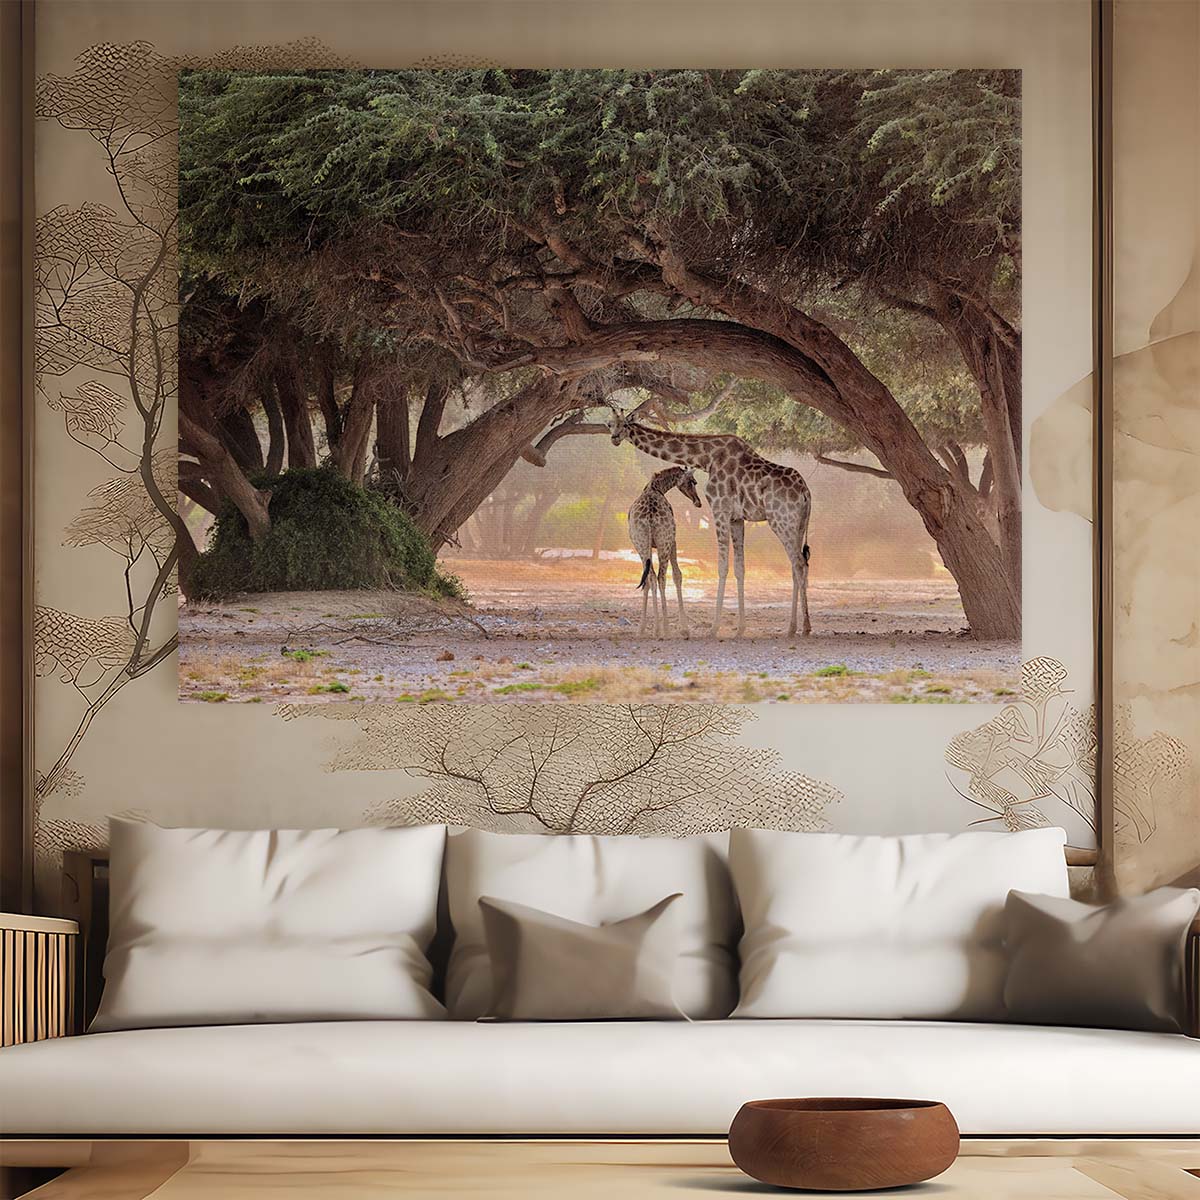 African Savannah Giraffes Gazing Wall Art by Luxuriance Designs. Made in USA.